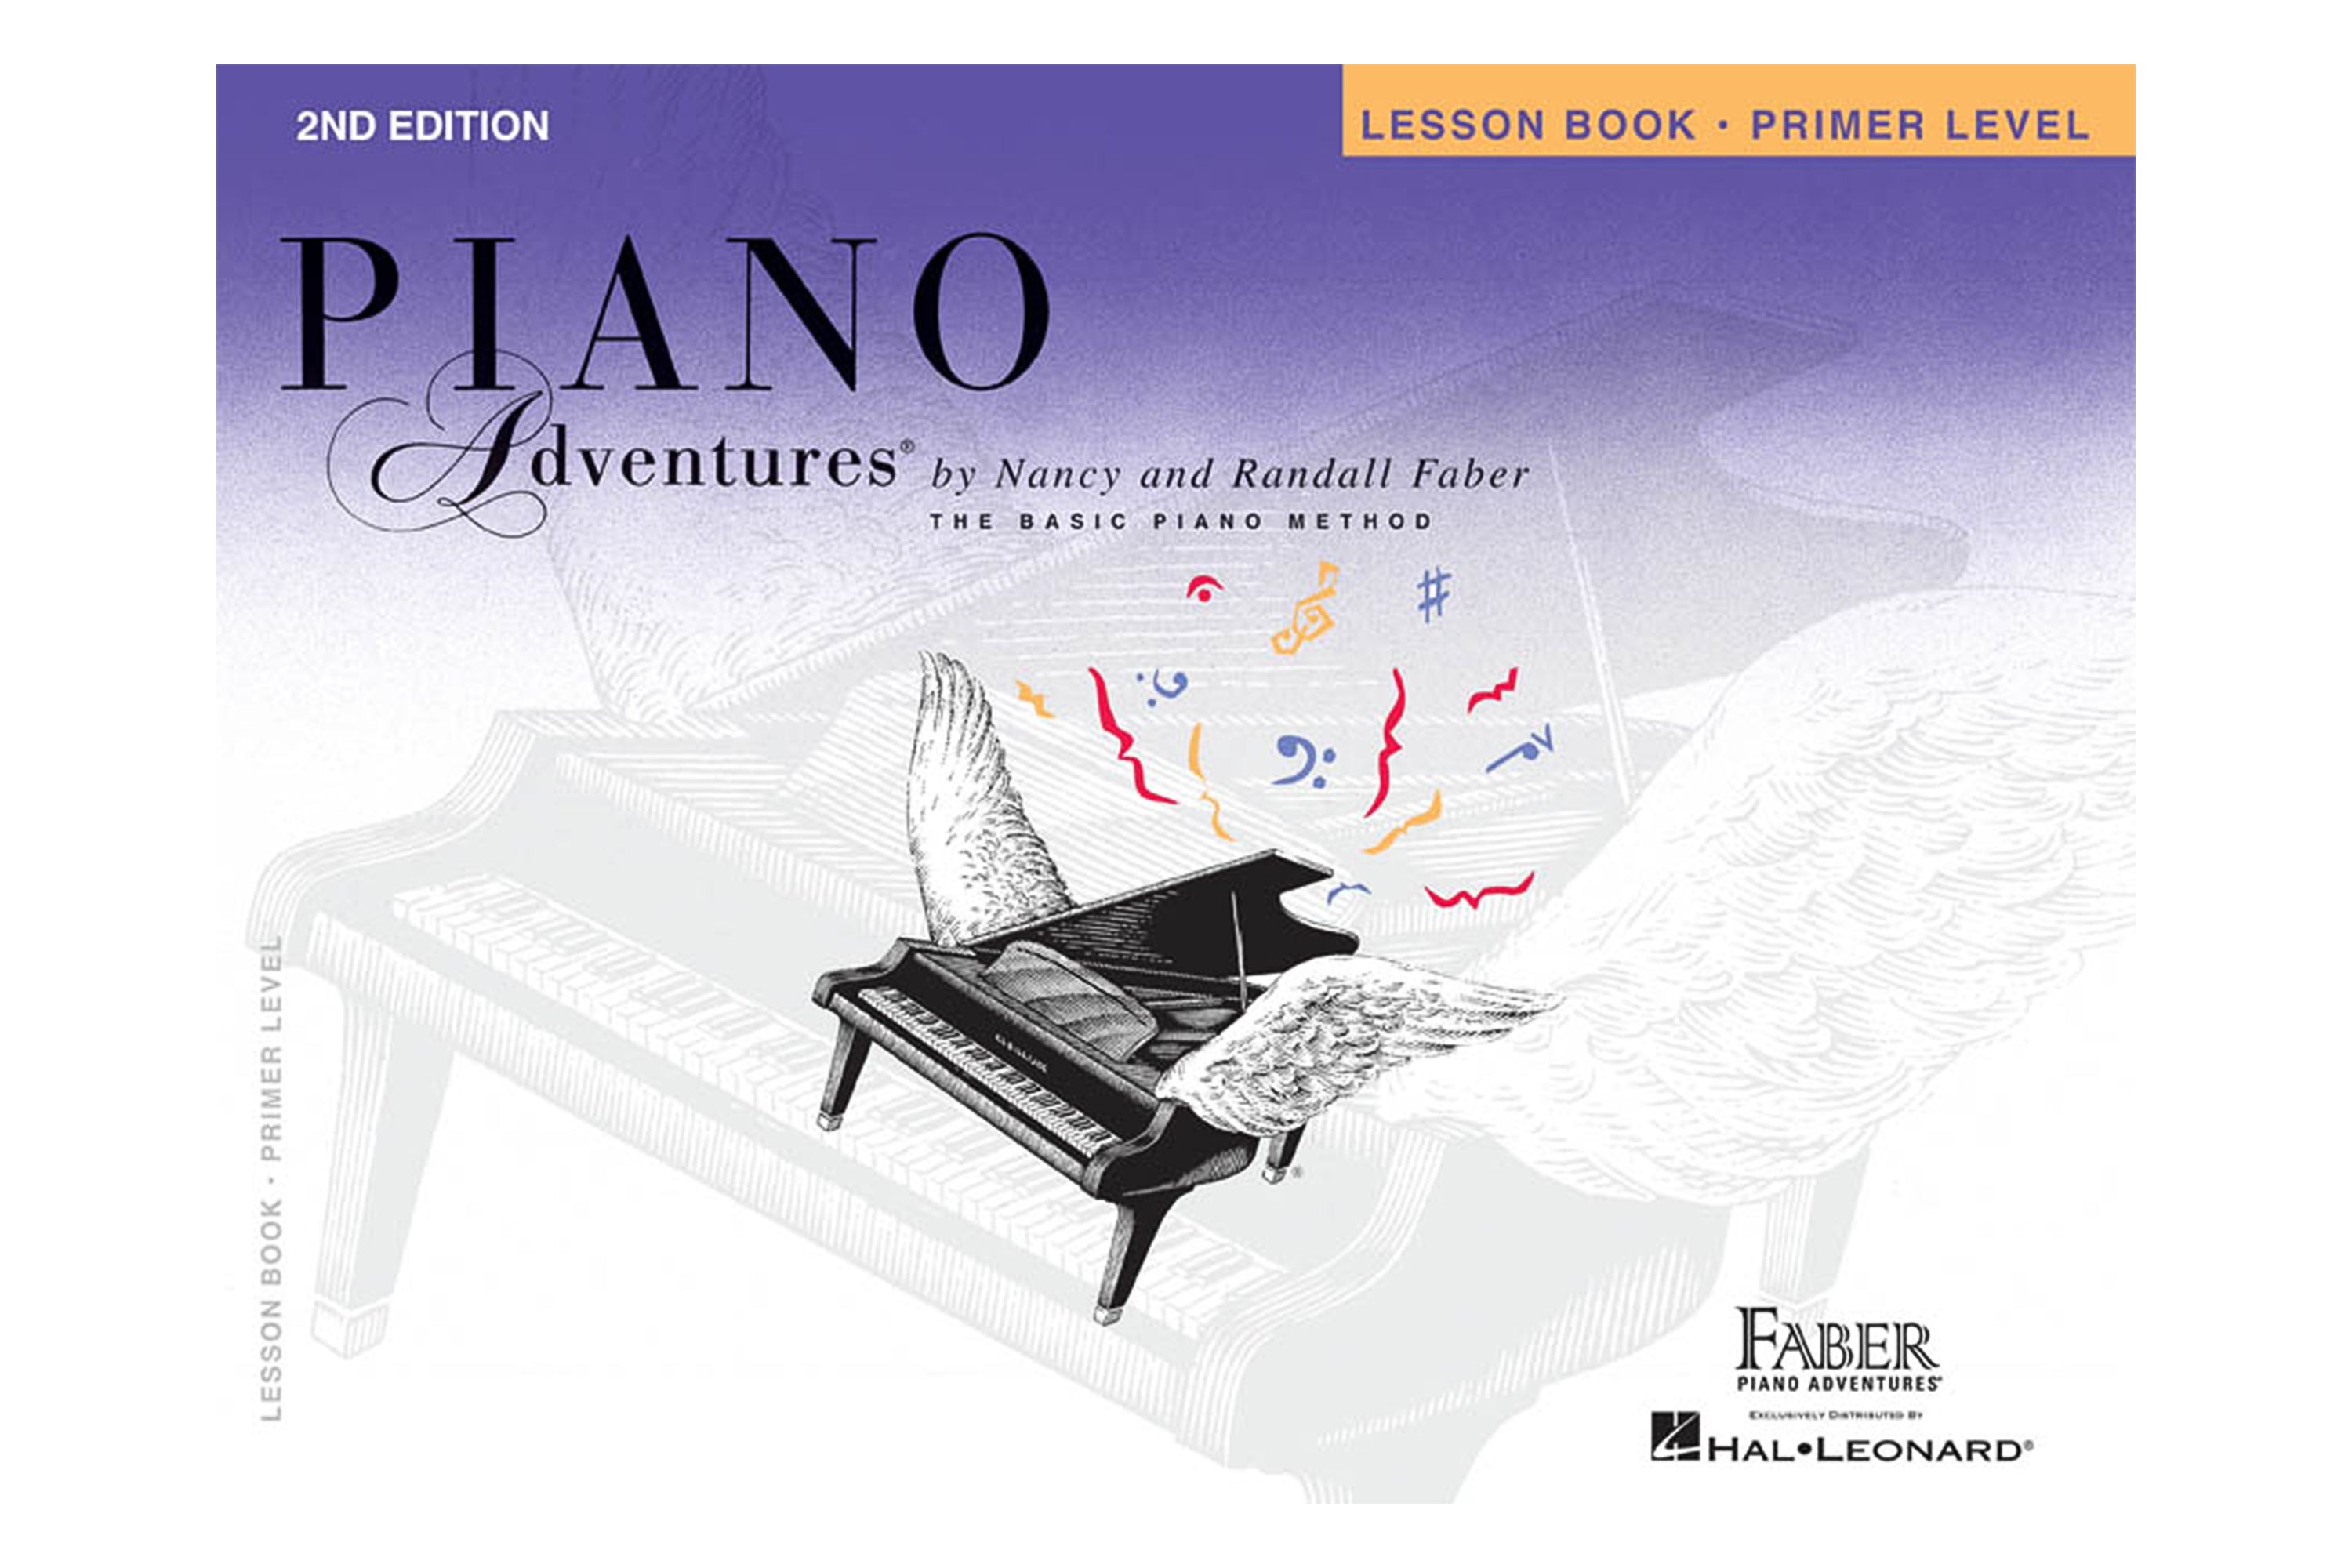 Piano Adventures: Primer Level Lesson Book - 2nd Edition